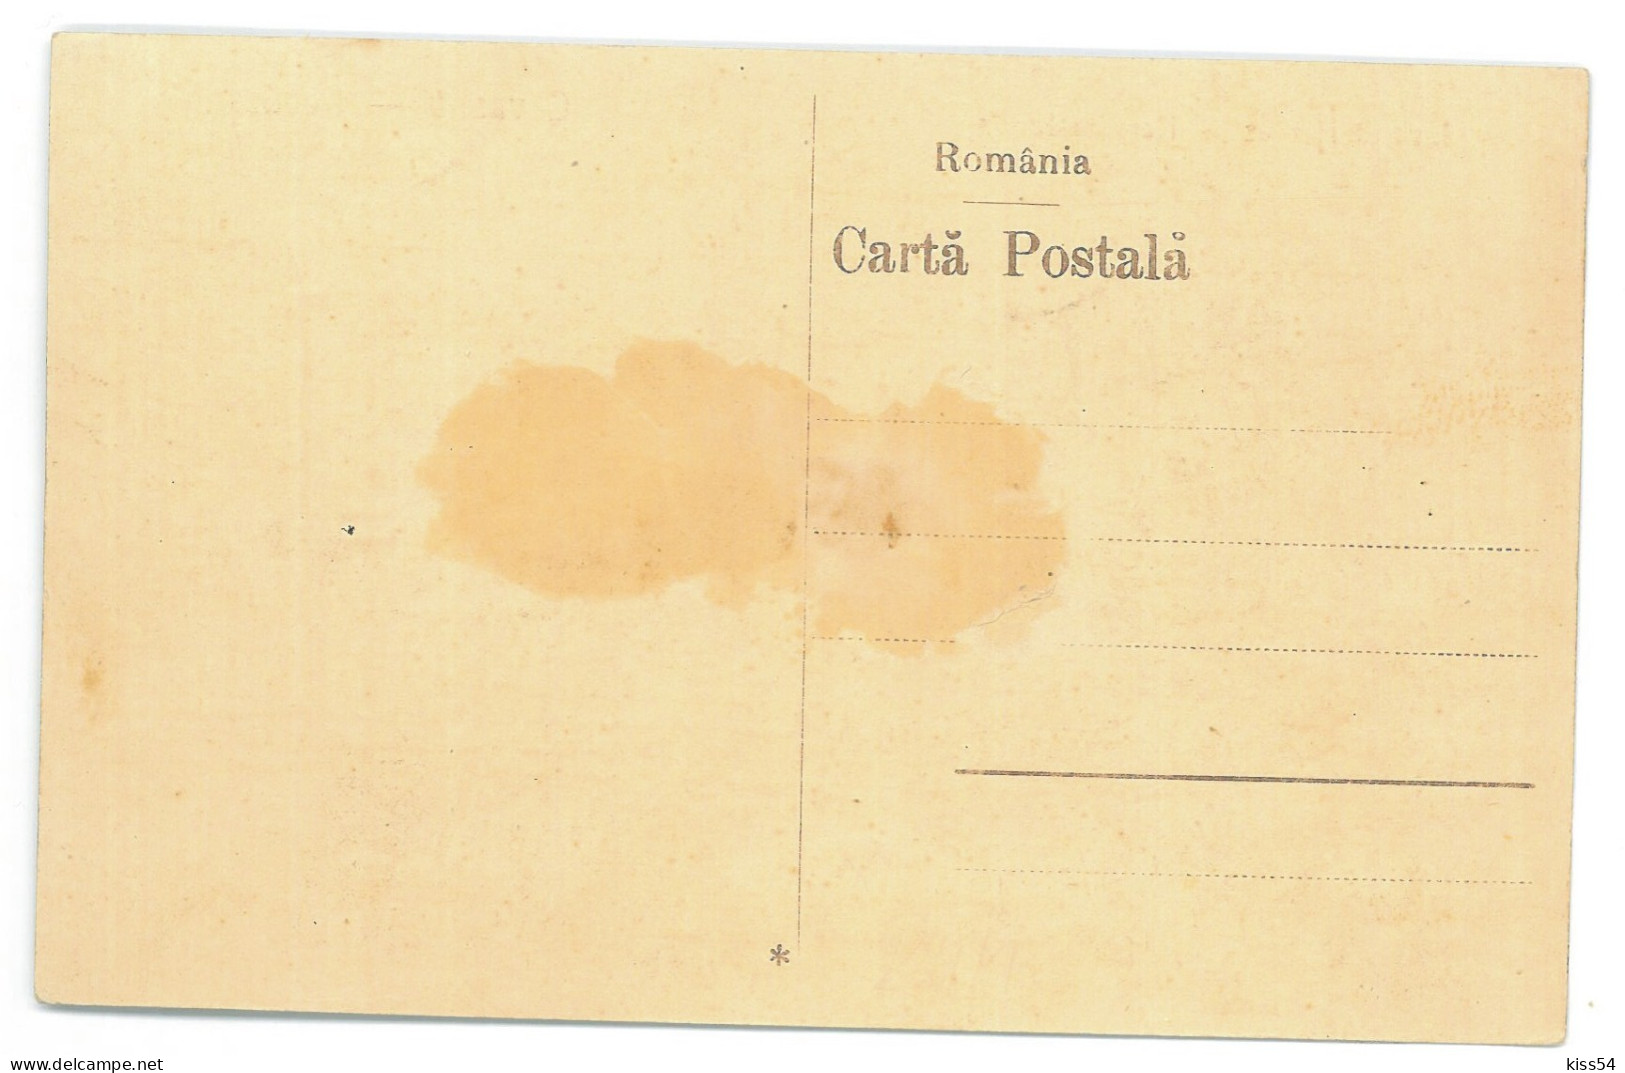 RO 38 - 25157 COVASNA, Izvorul Horgas, Romania - Old Postcard - Unused - Roumanie